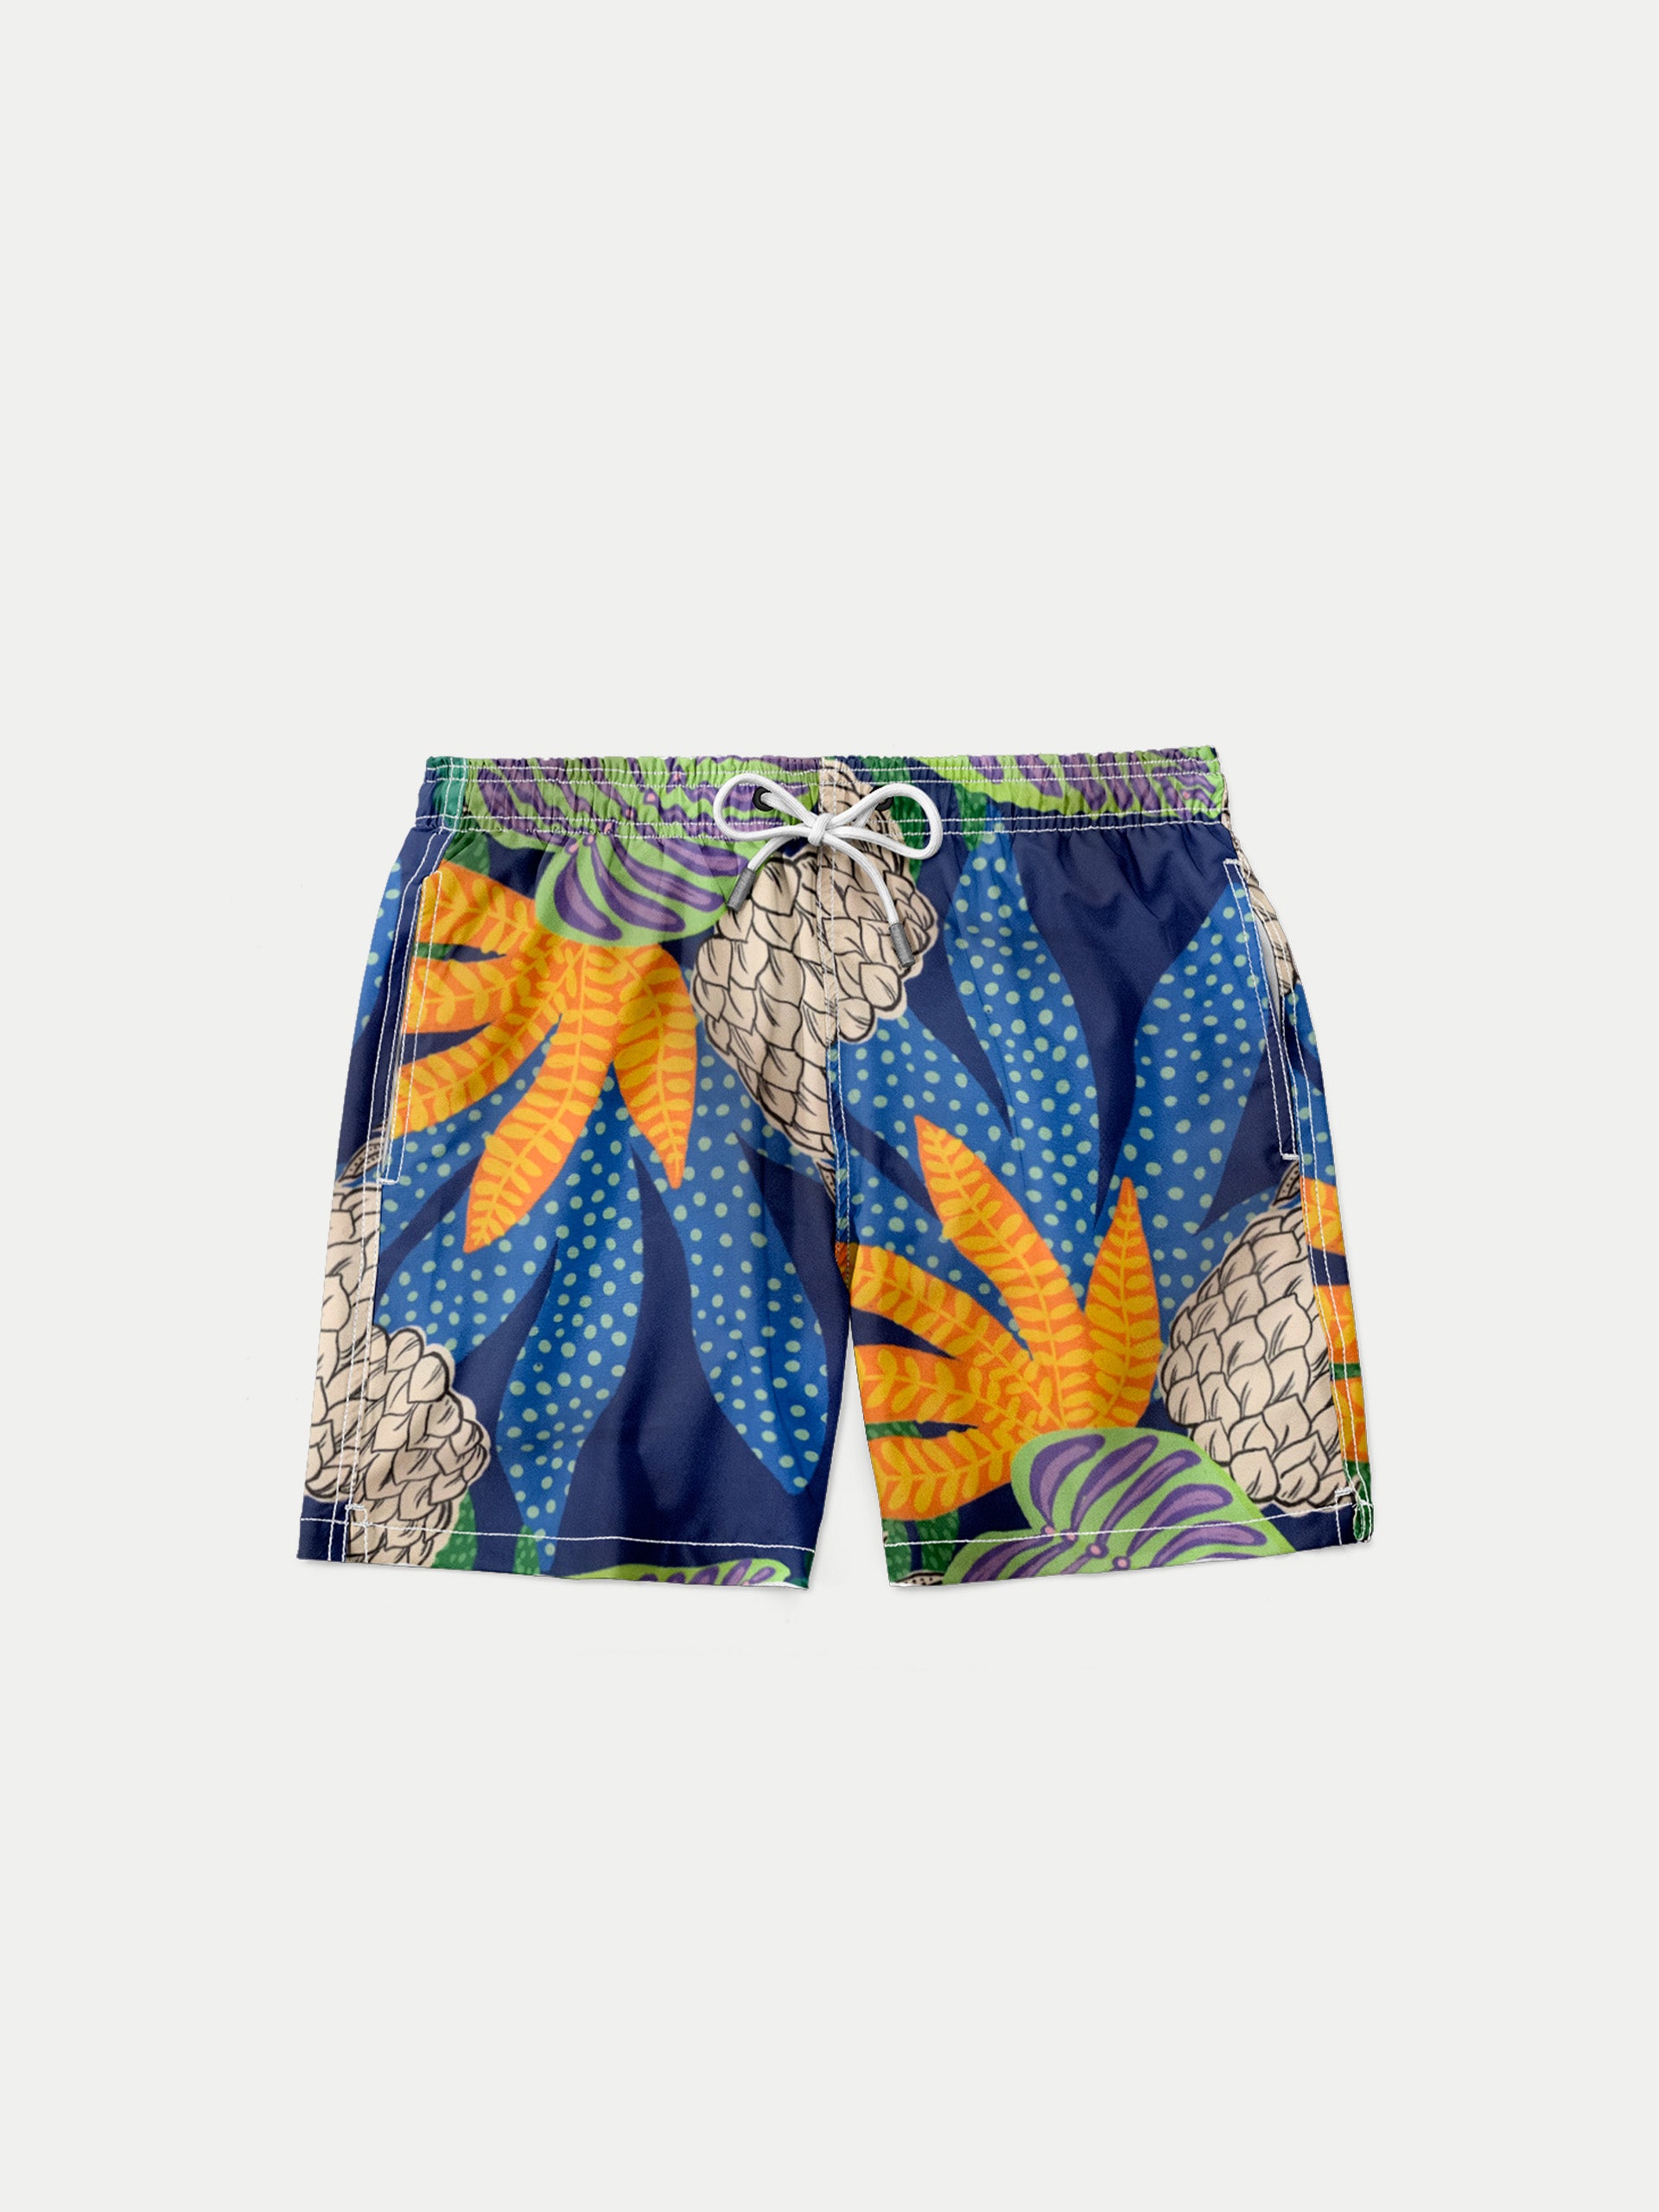 'Sunset Pineapple' Boys Swim Shorts by 98 Coast Av.